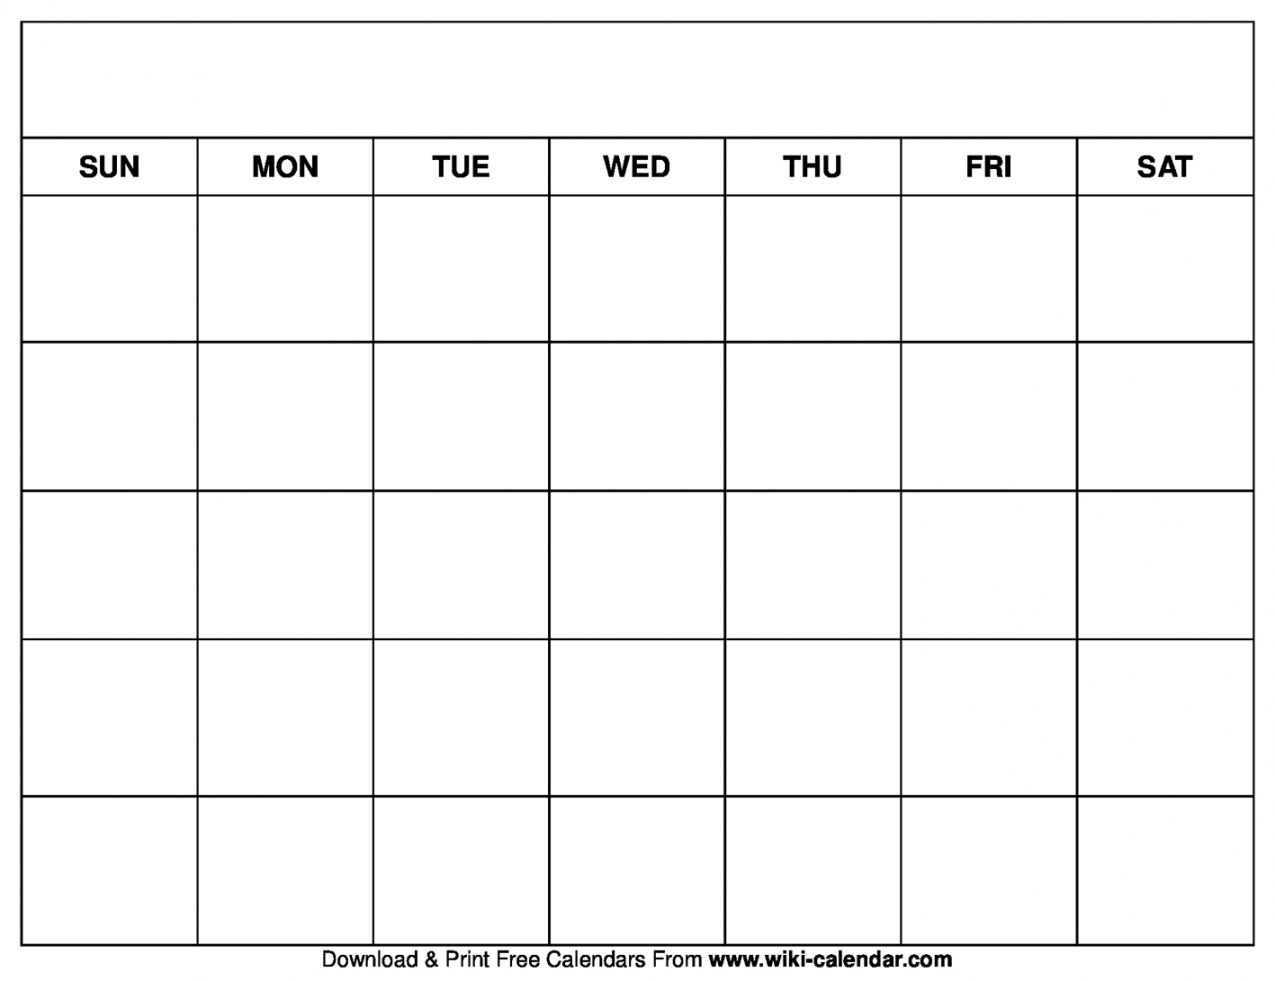 Free Blank Monthly Calendar Printable - Printable - Printable Blank Calendar Templates - Wiki Calendar